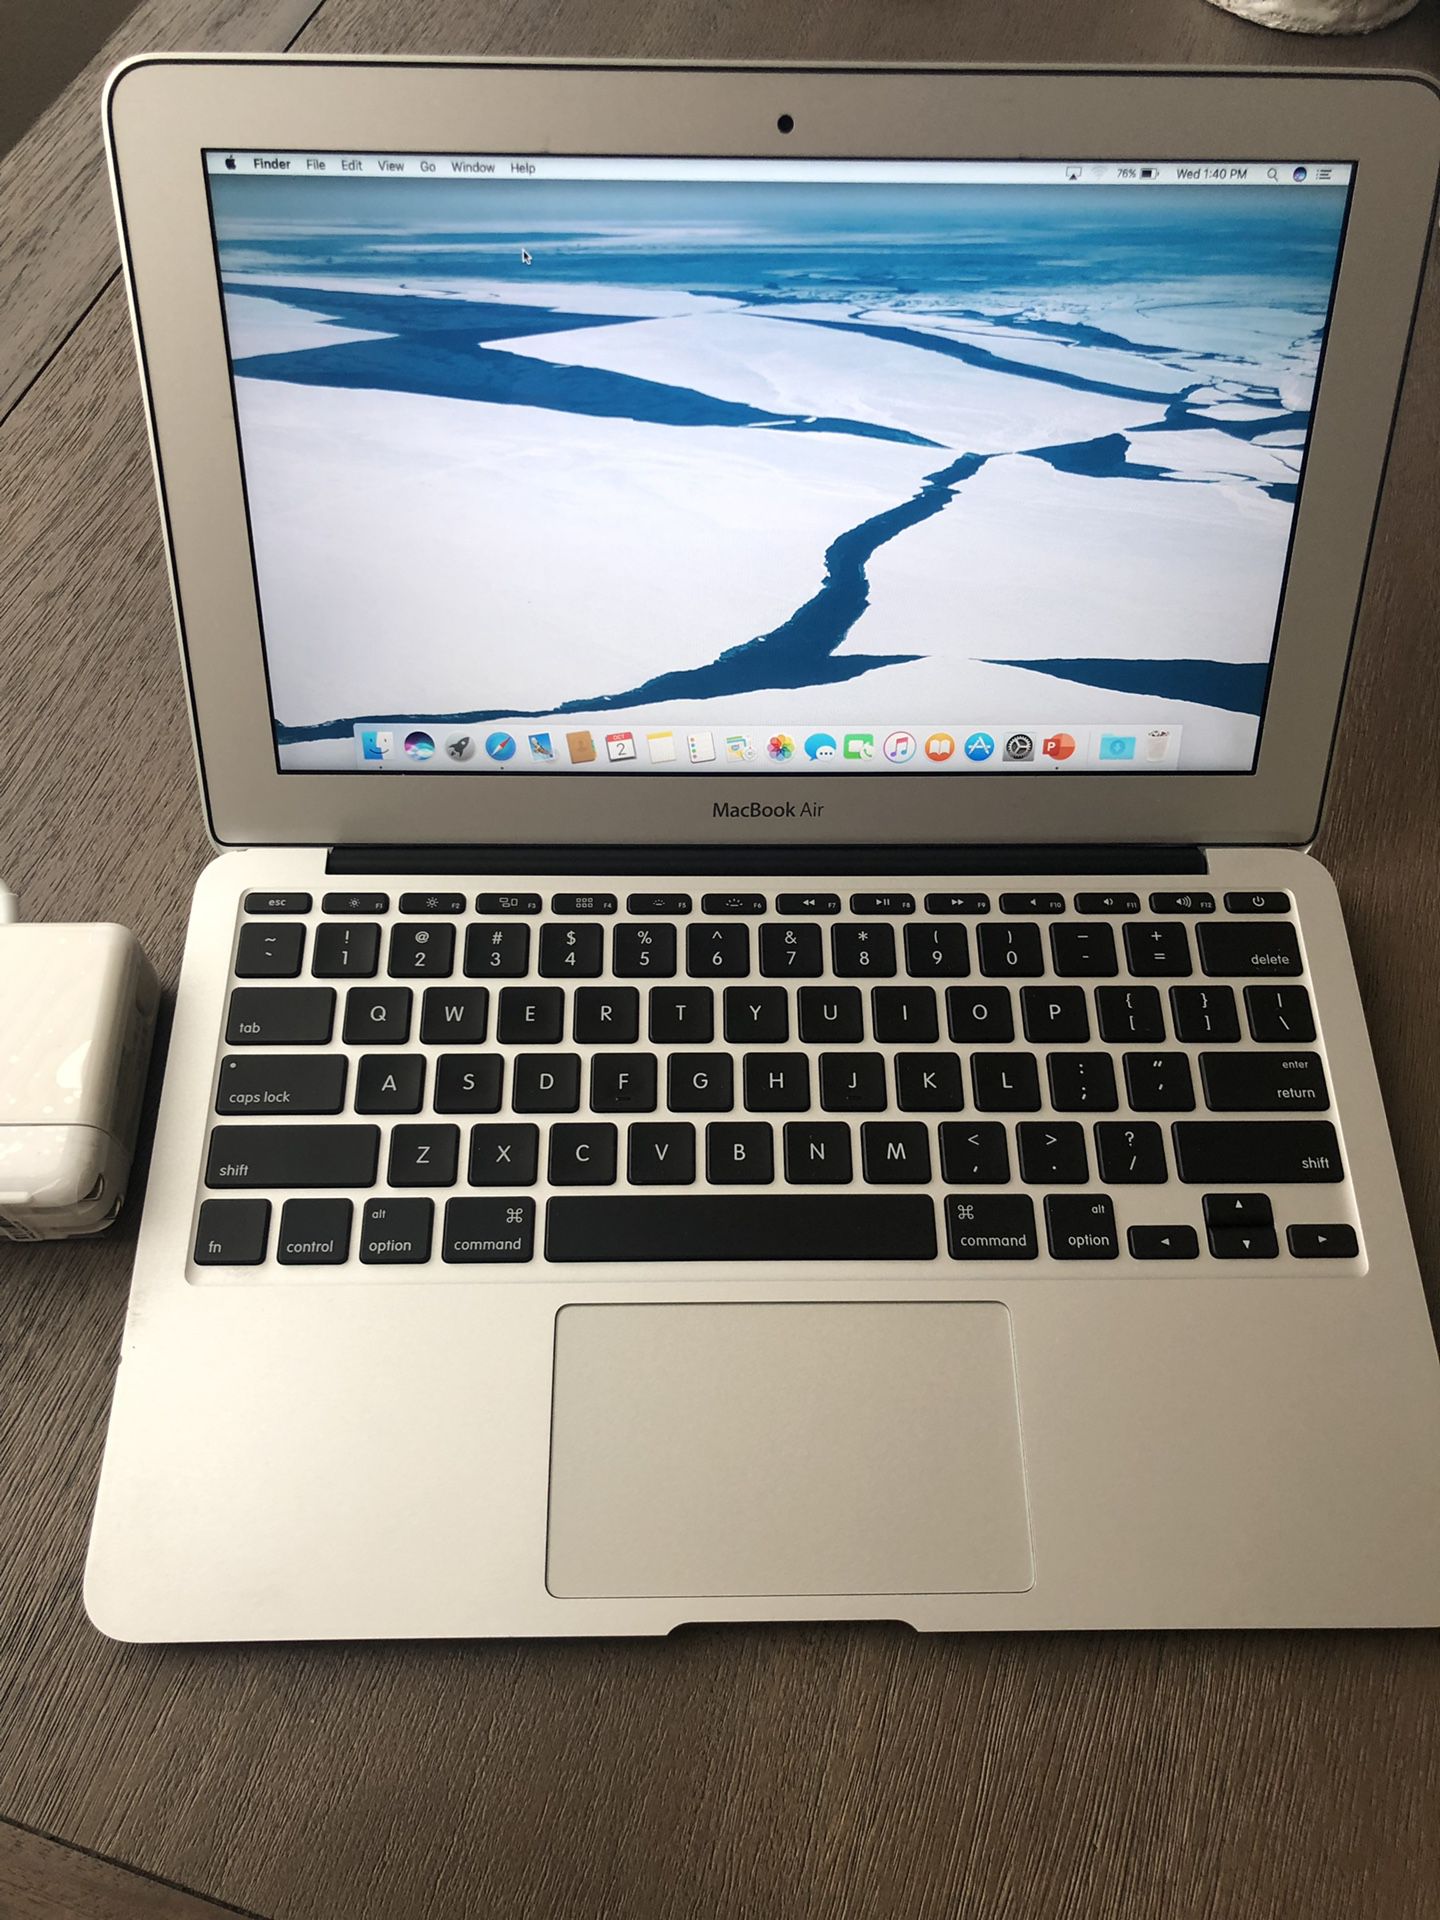 Apple MacBook Air 11” Computer Laptop